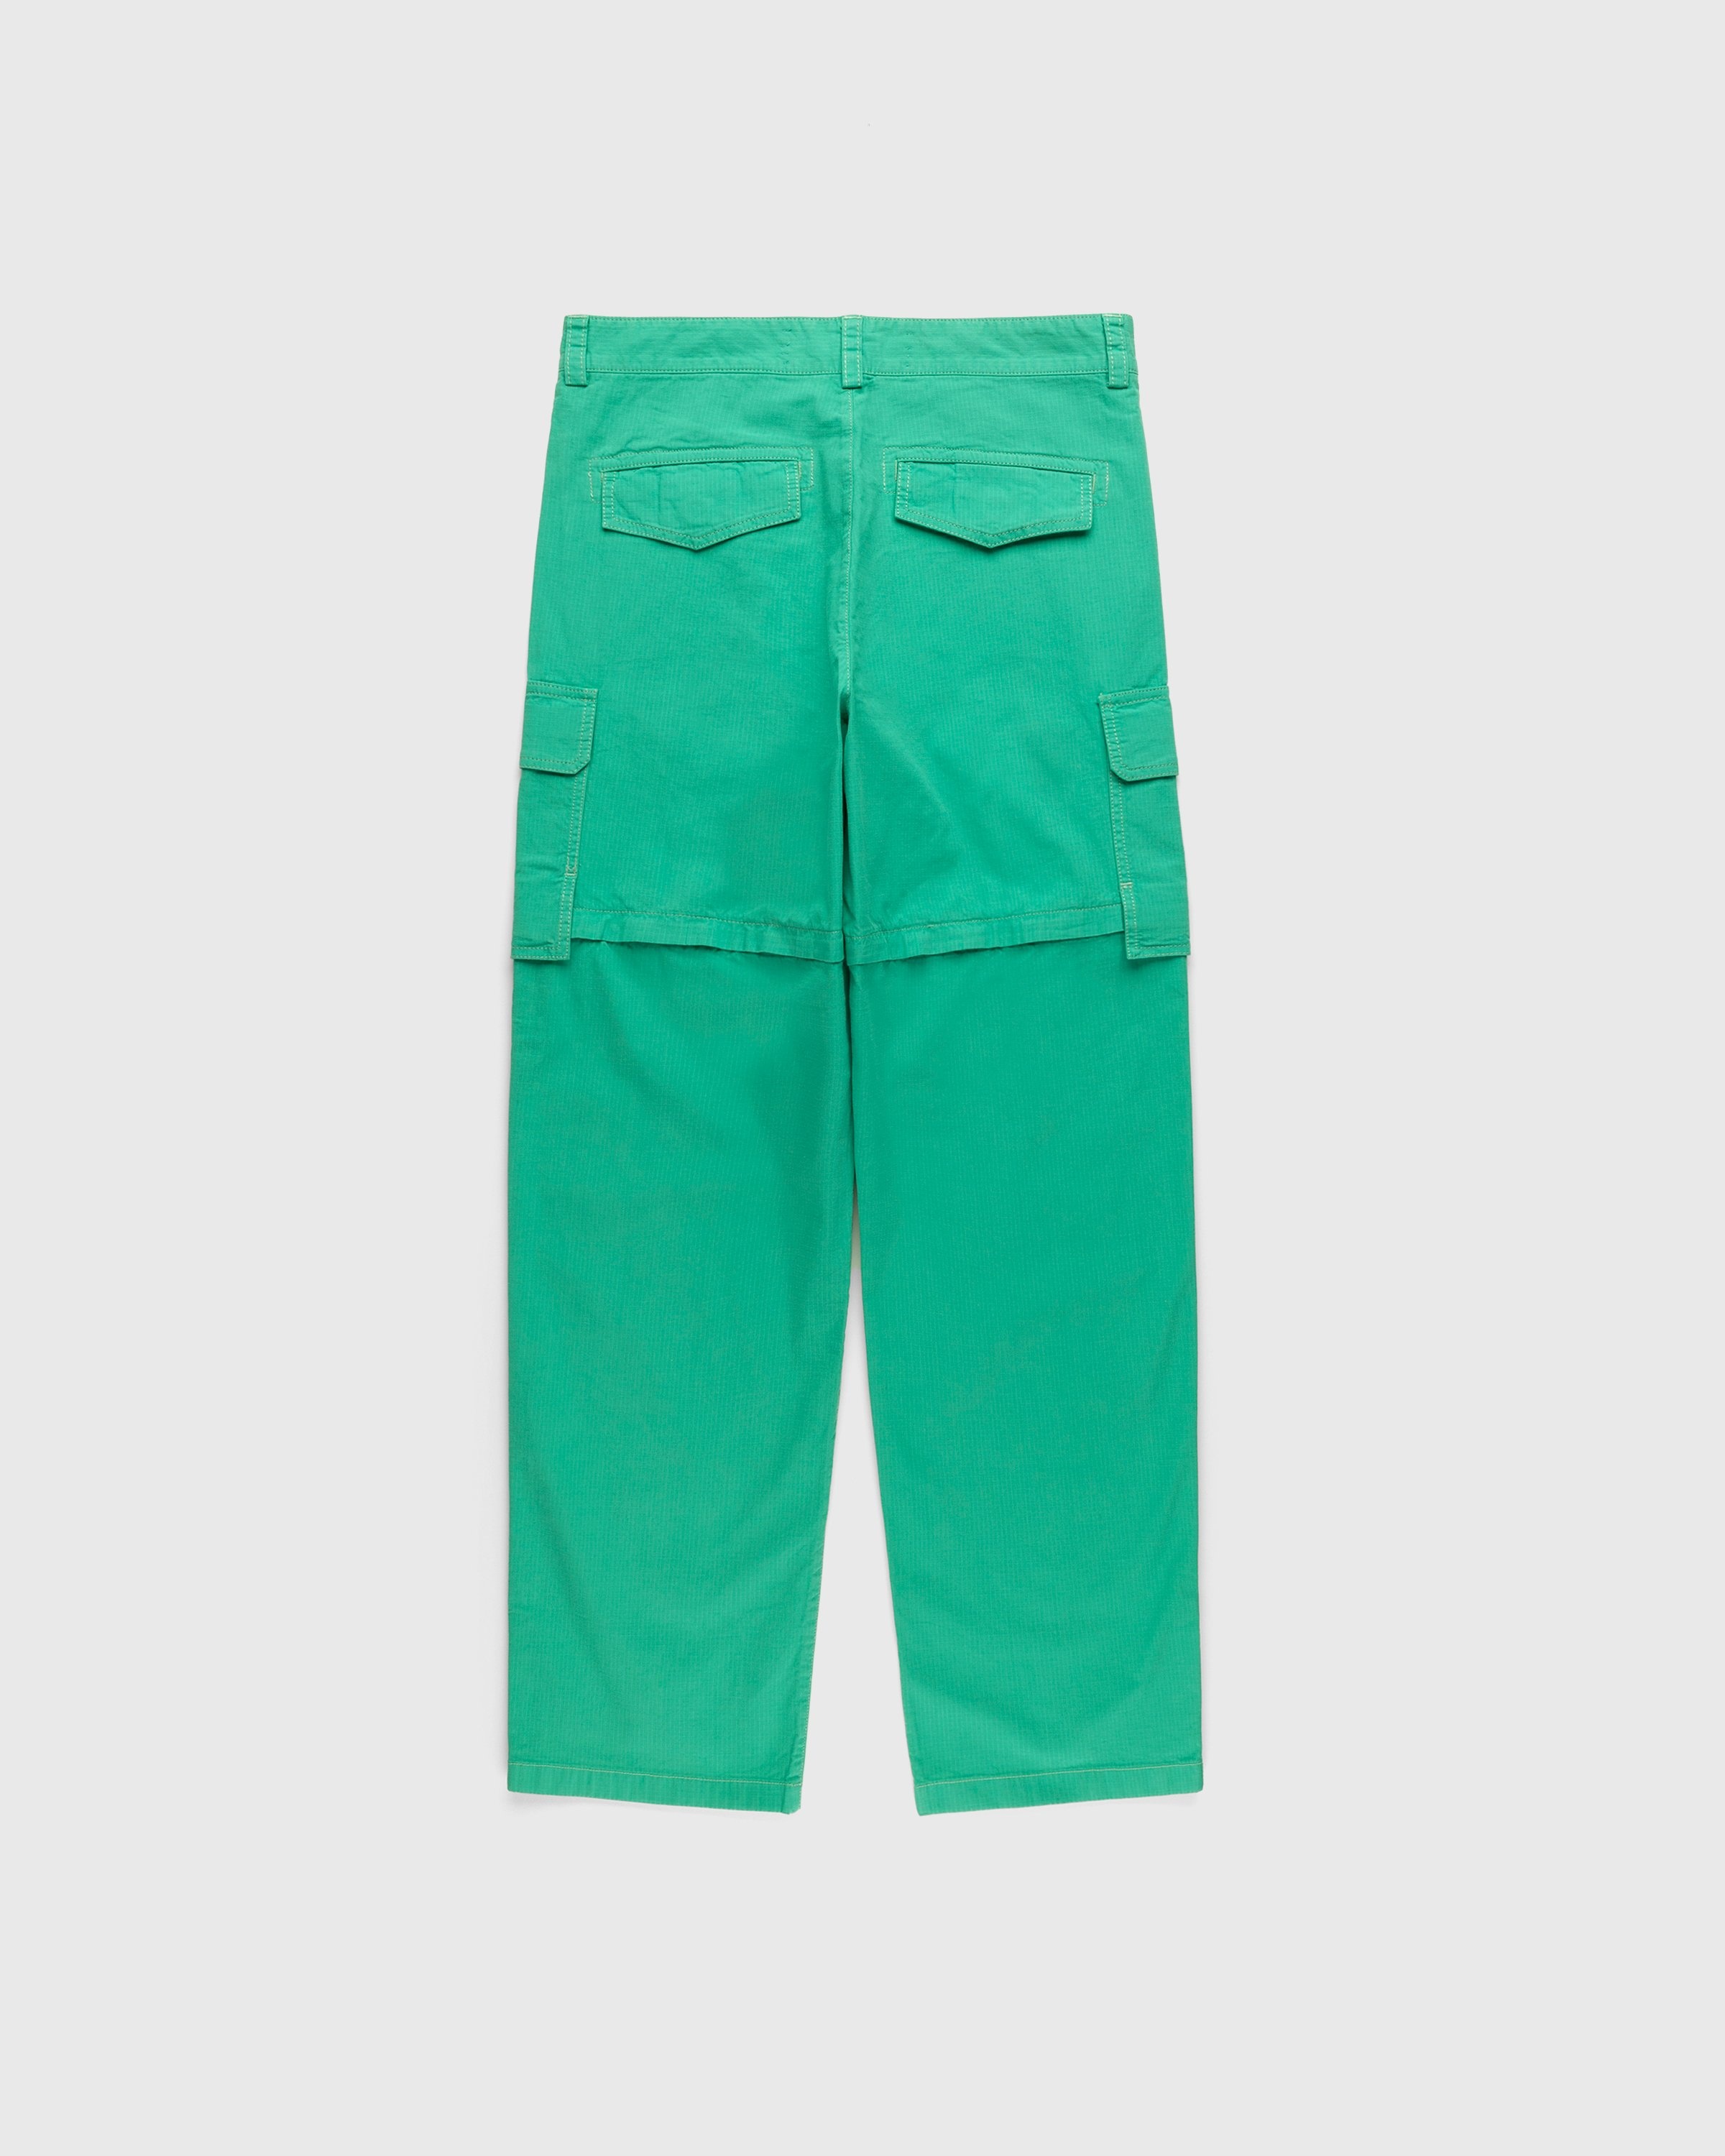 JACQUEMUS – Le Pantalon Peche Green - Pants - Green - Image 2